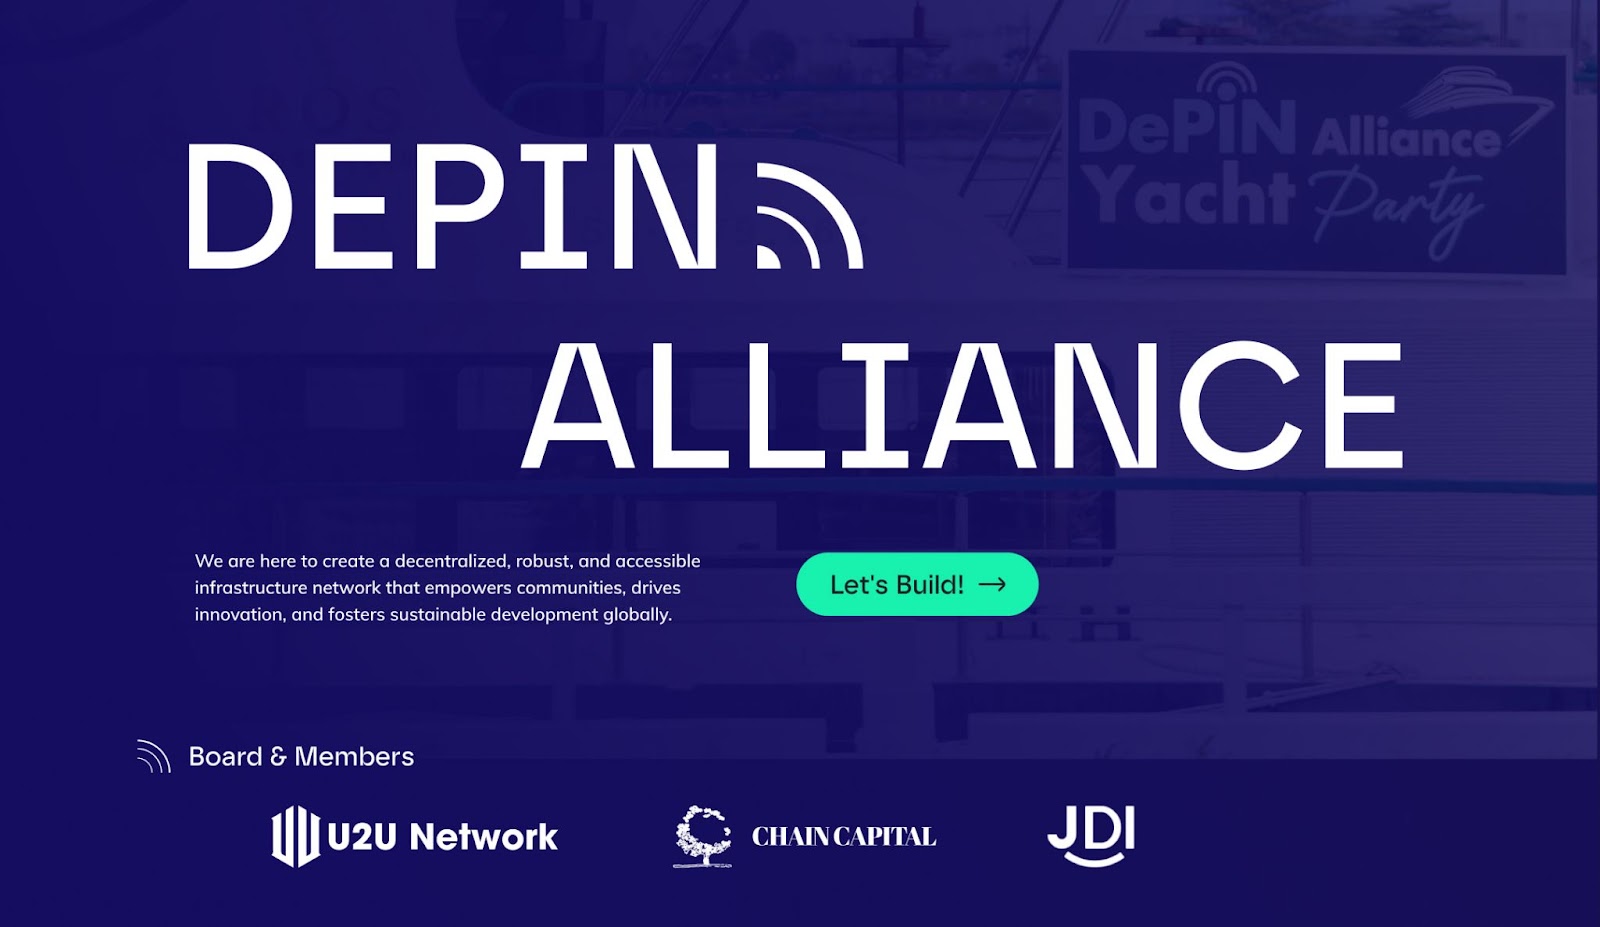 U2U Network, Chain Capital, and JDI Ventures Launch Groundbreaking DePIN Alliance to Revolutionize Global Infrastructure